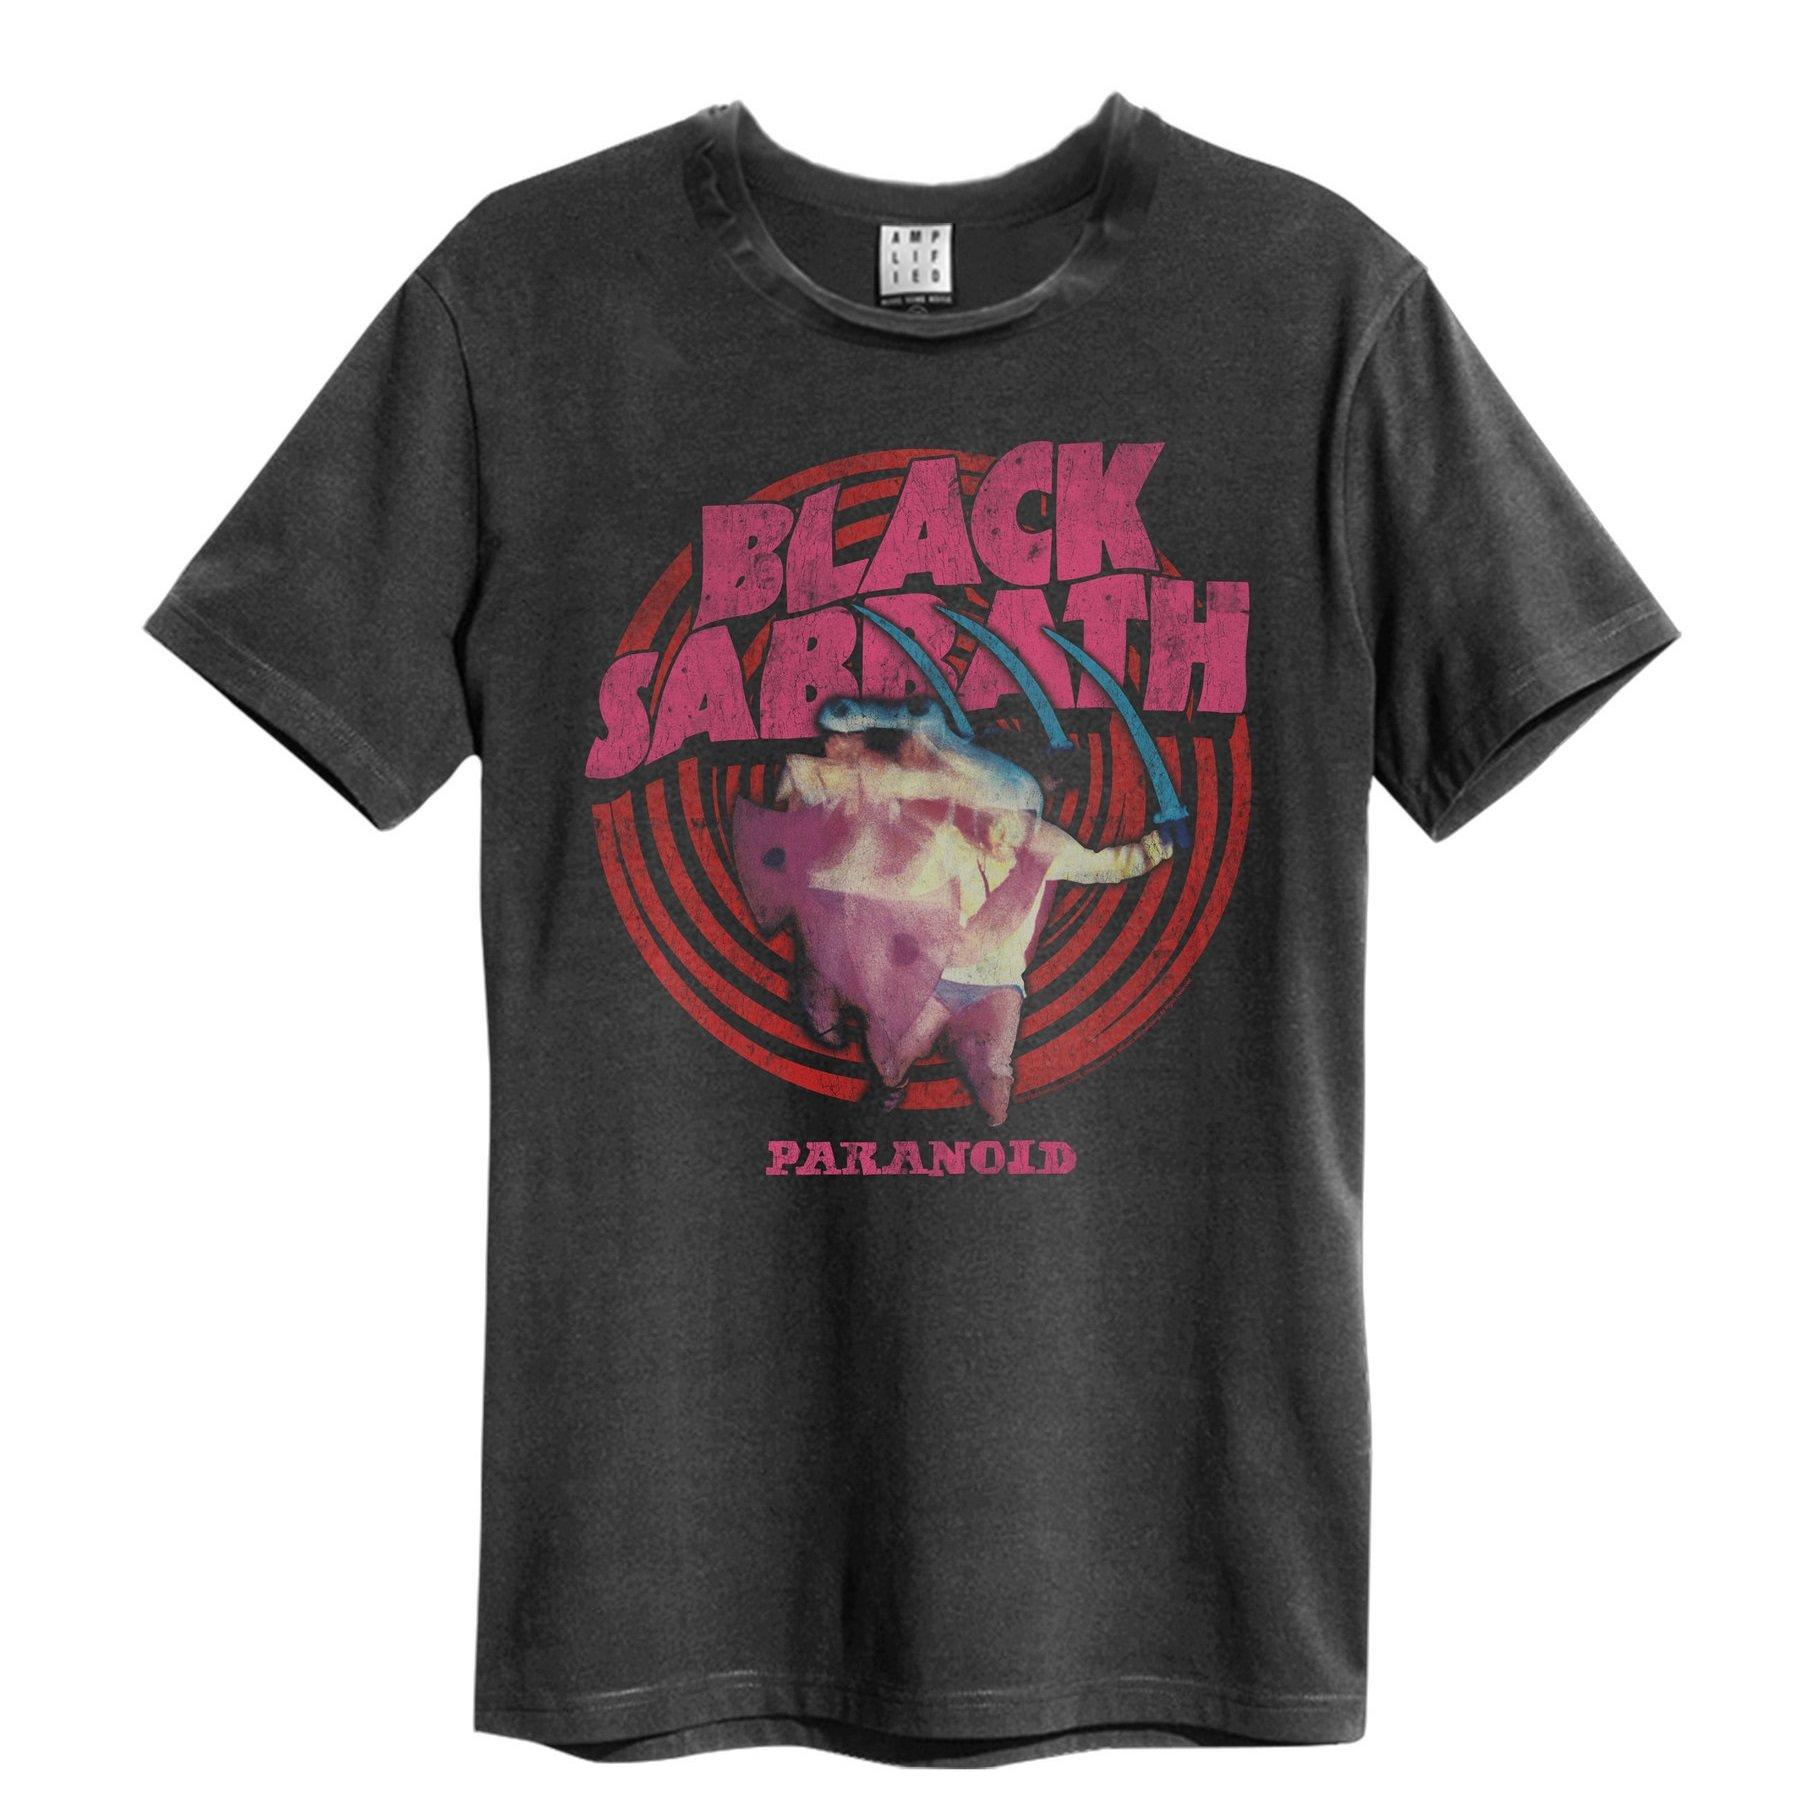 "black Sabbath Paranoid" Tshirt Damen Charcoal Black XS von Amplified